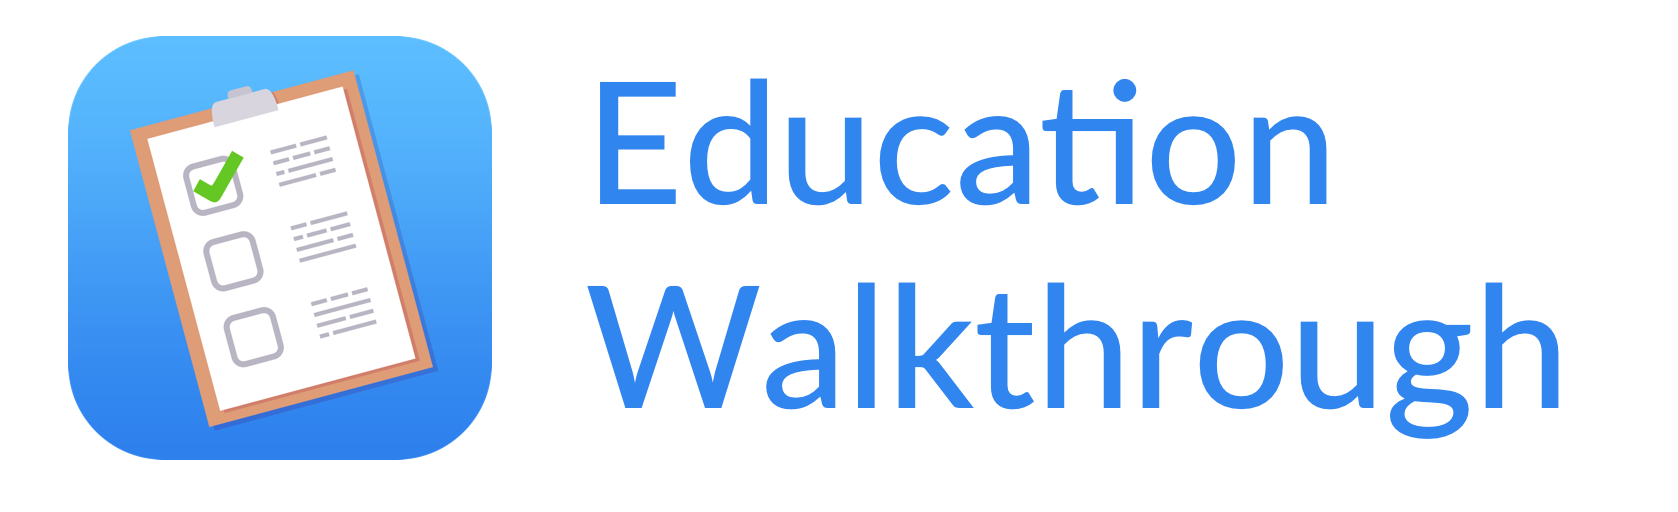 Education Walkthrough